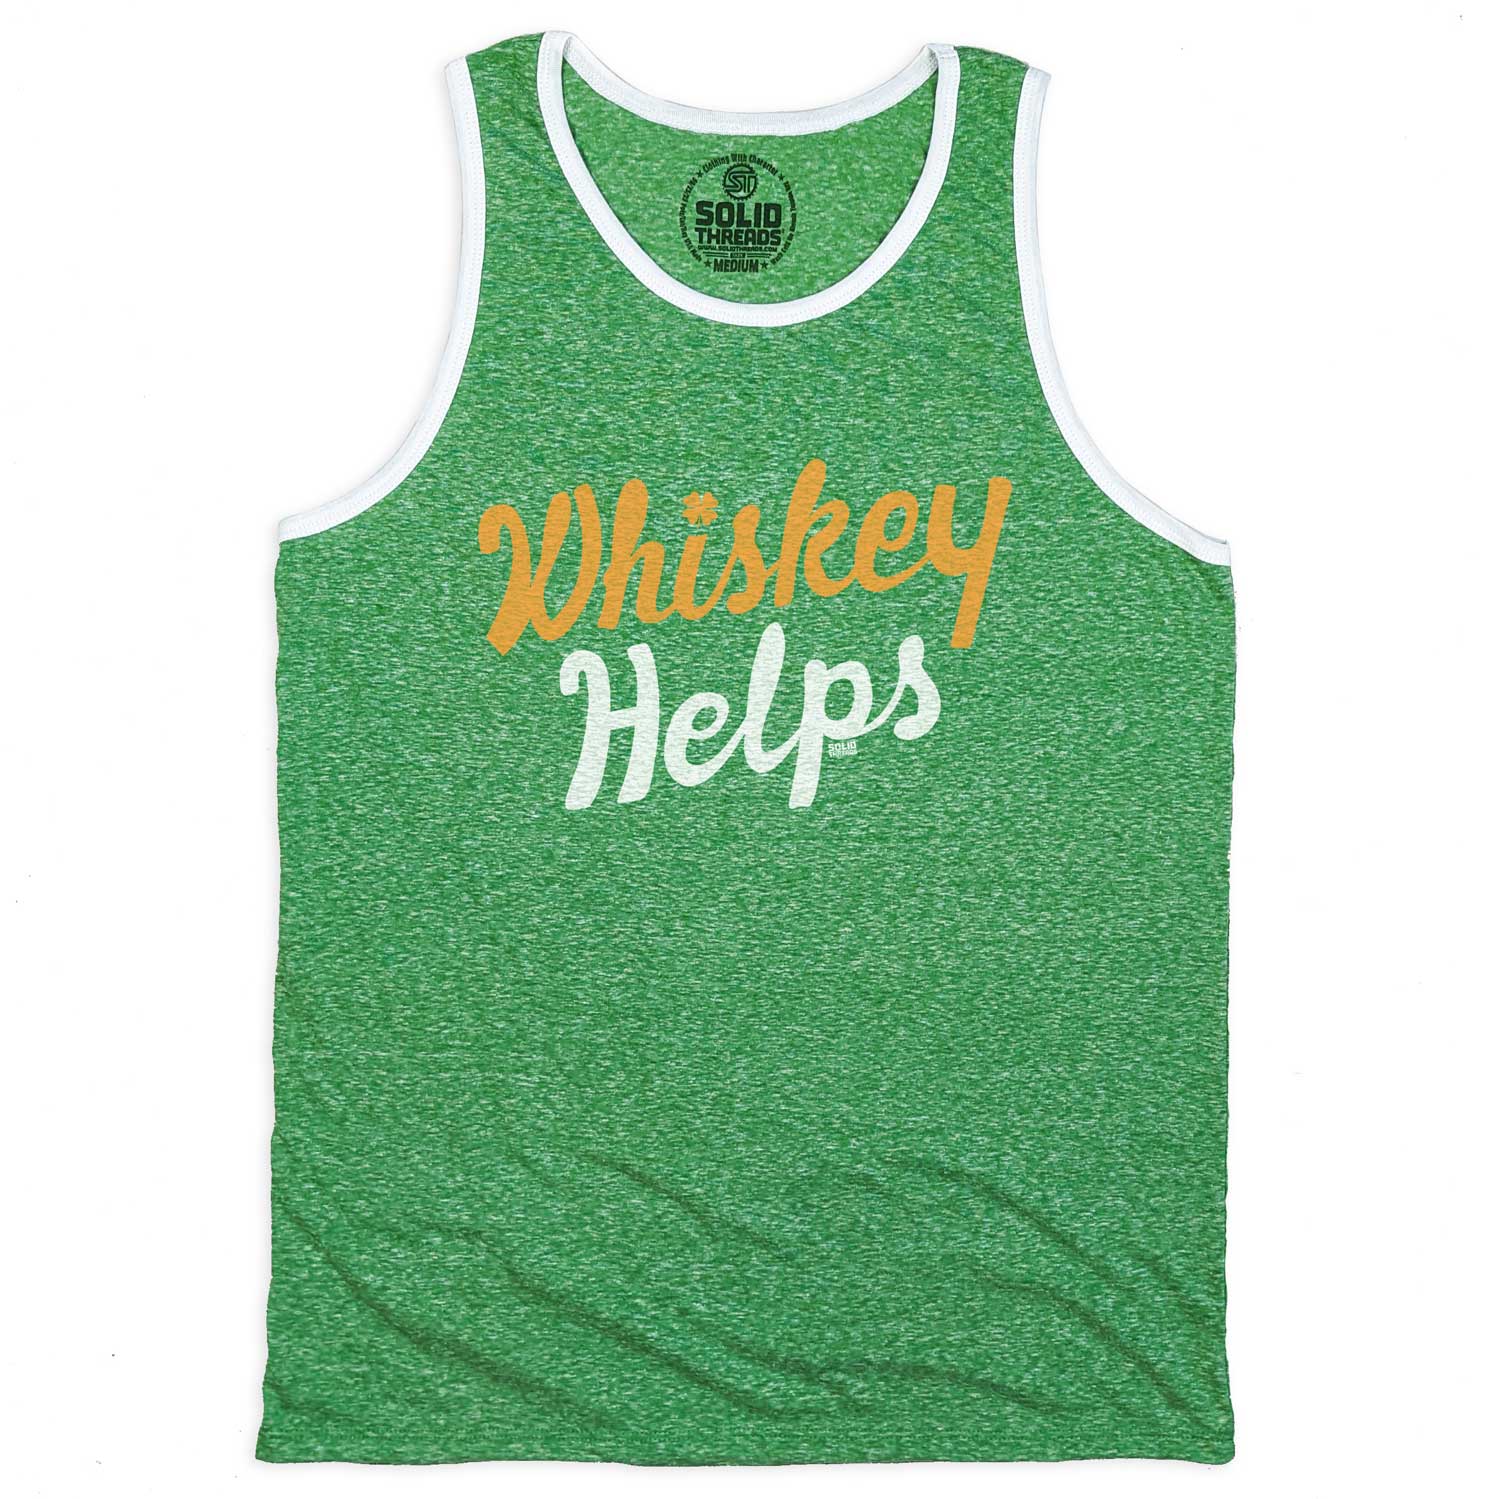 Men's Irish Whiskey Helps Vintage Graphic Tank Top | Funny Irish T-shirt | Solid Threads